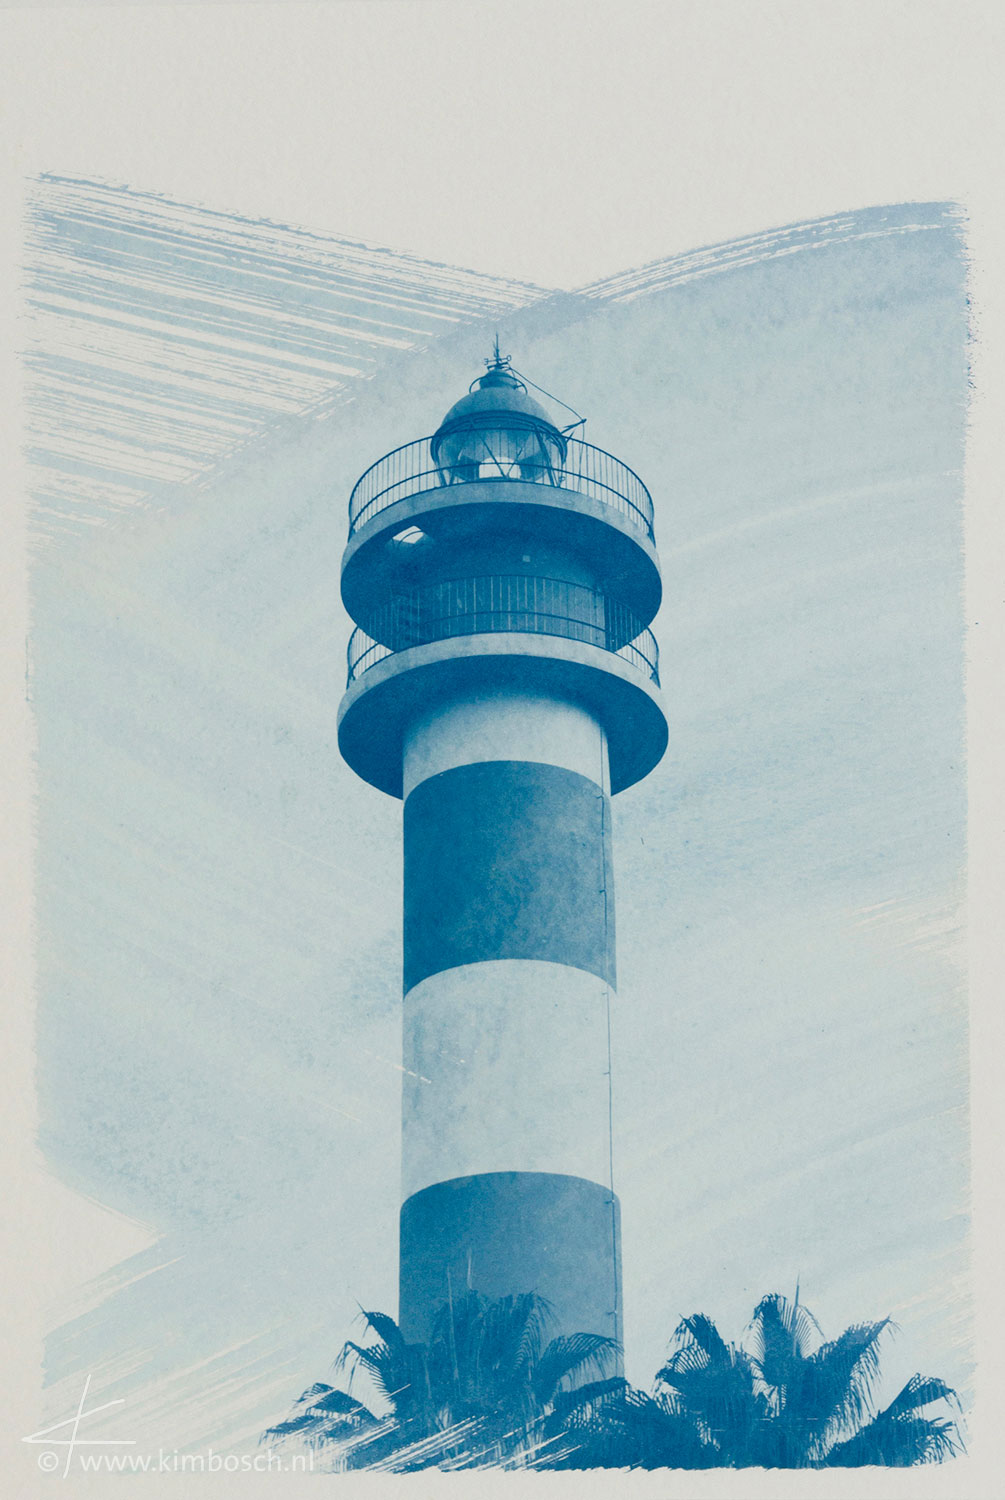 Lighthouse 1, Torre del Mar, 31 x 21 cm